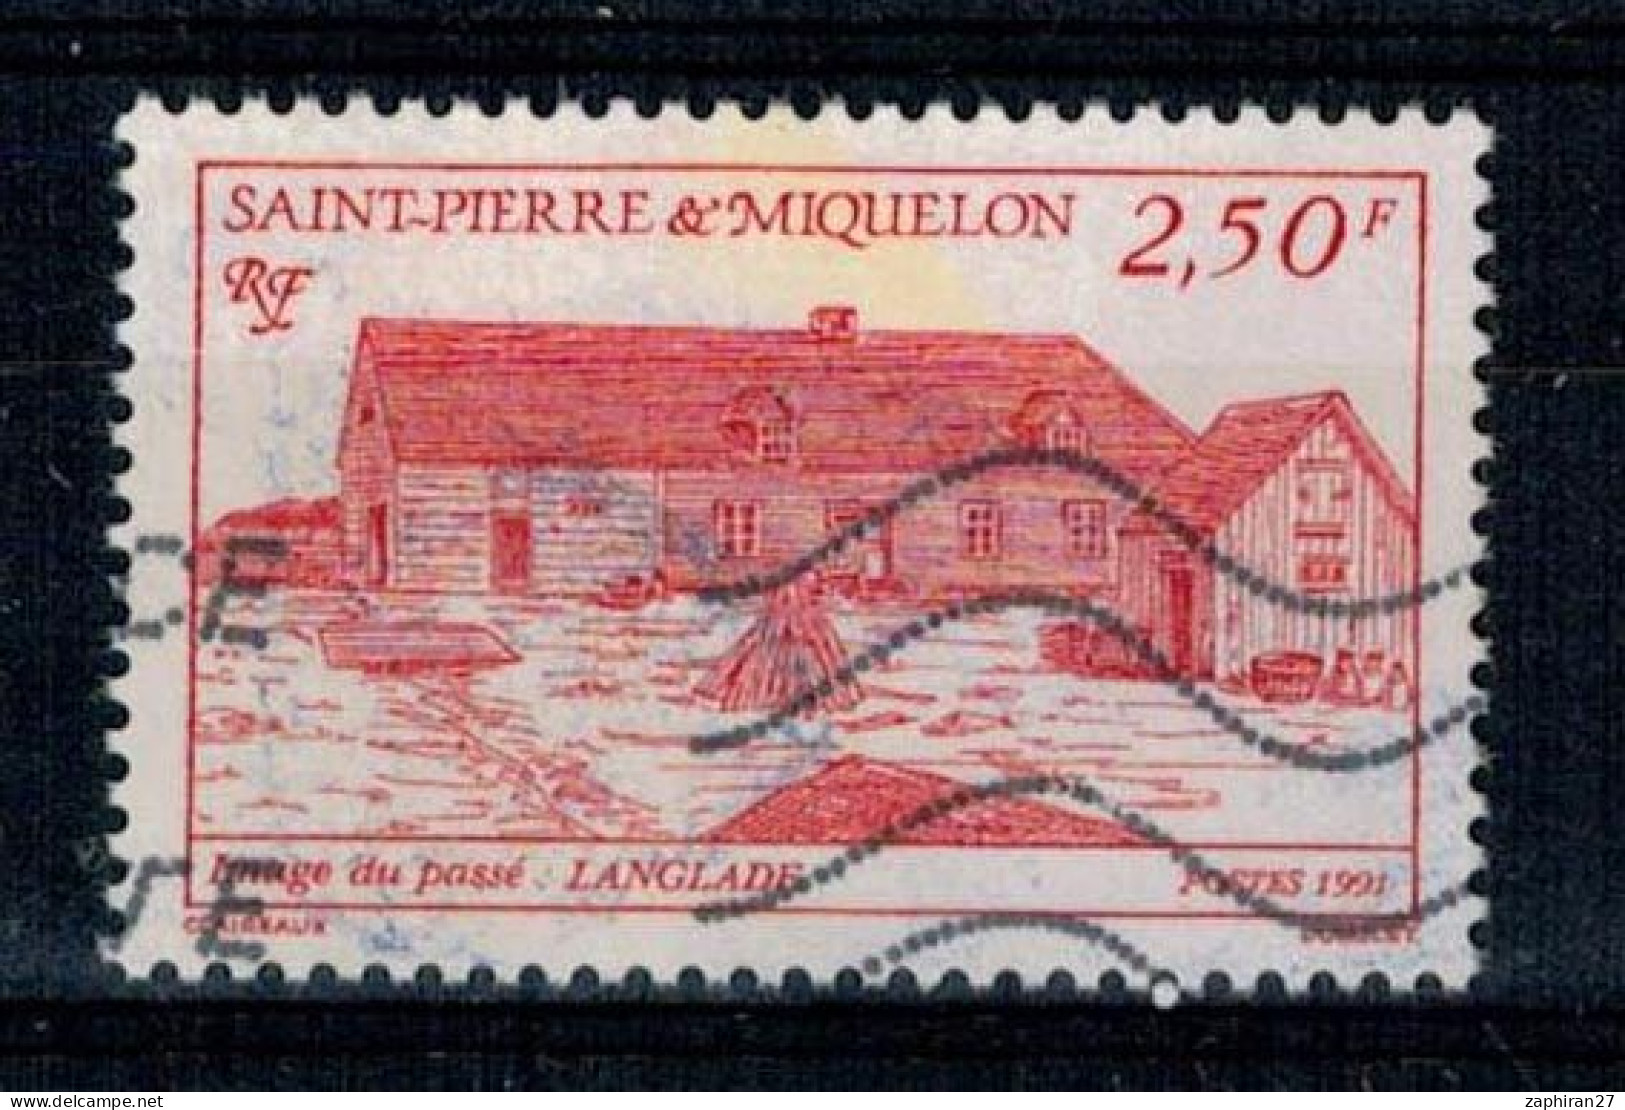 1991 ST PIERRE ET MIQUELON LANGLADE OBLITERE #234# - Used Stamps